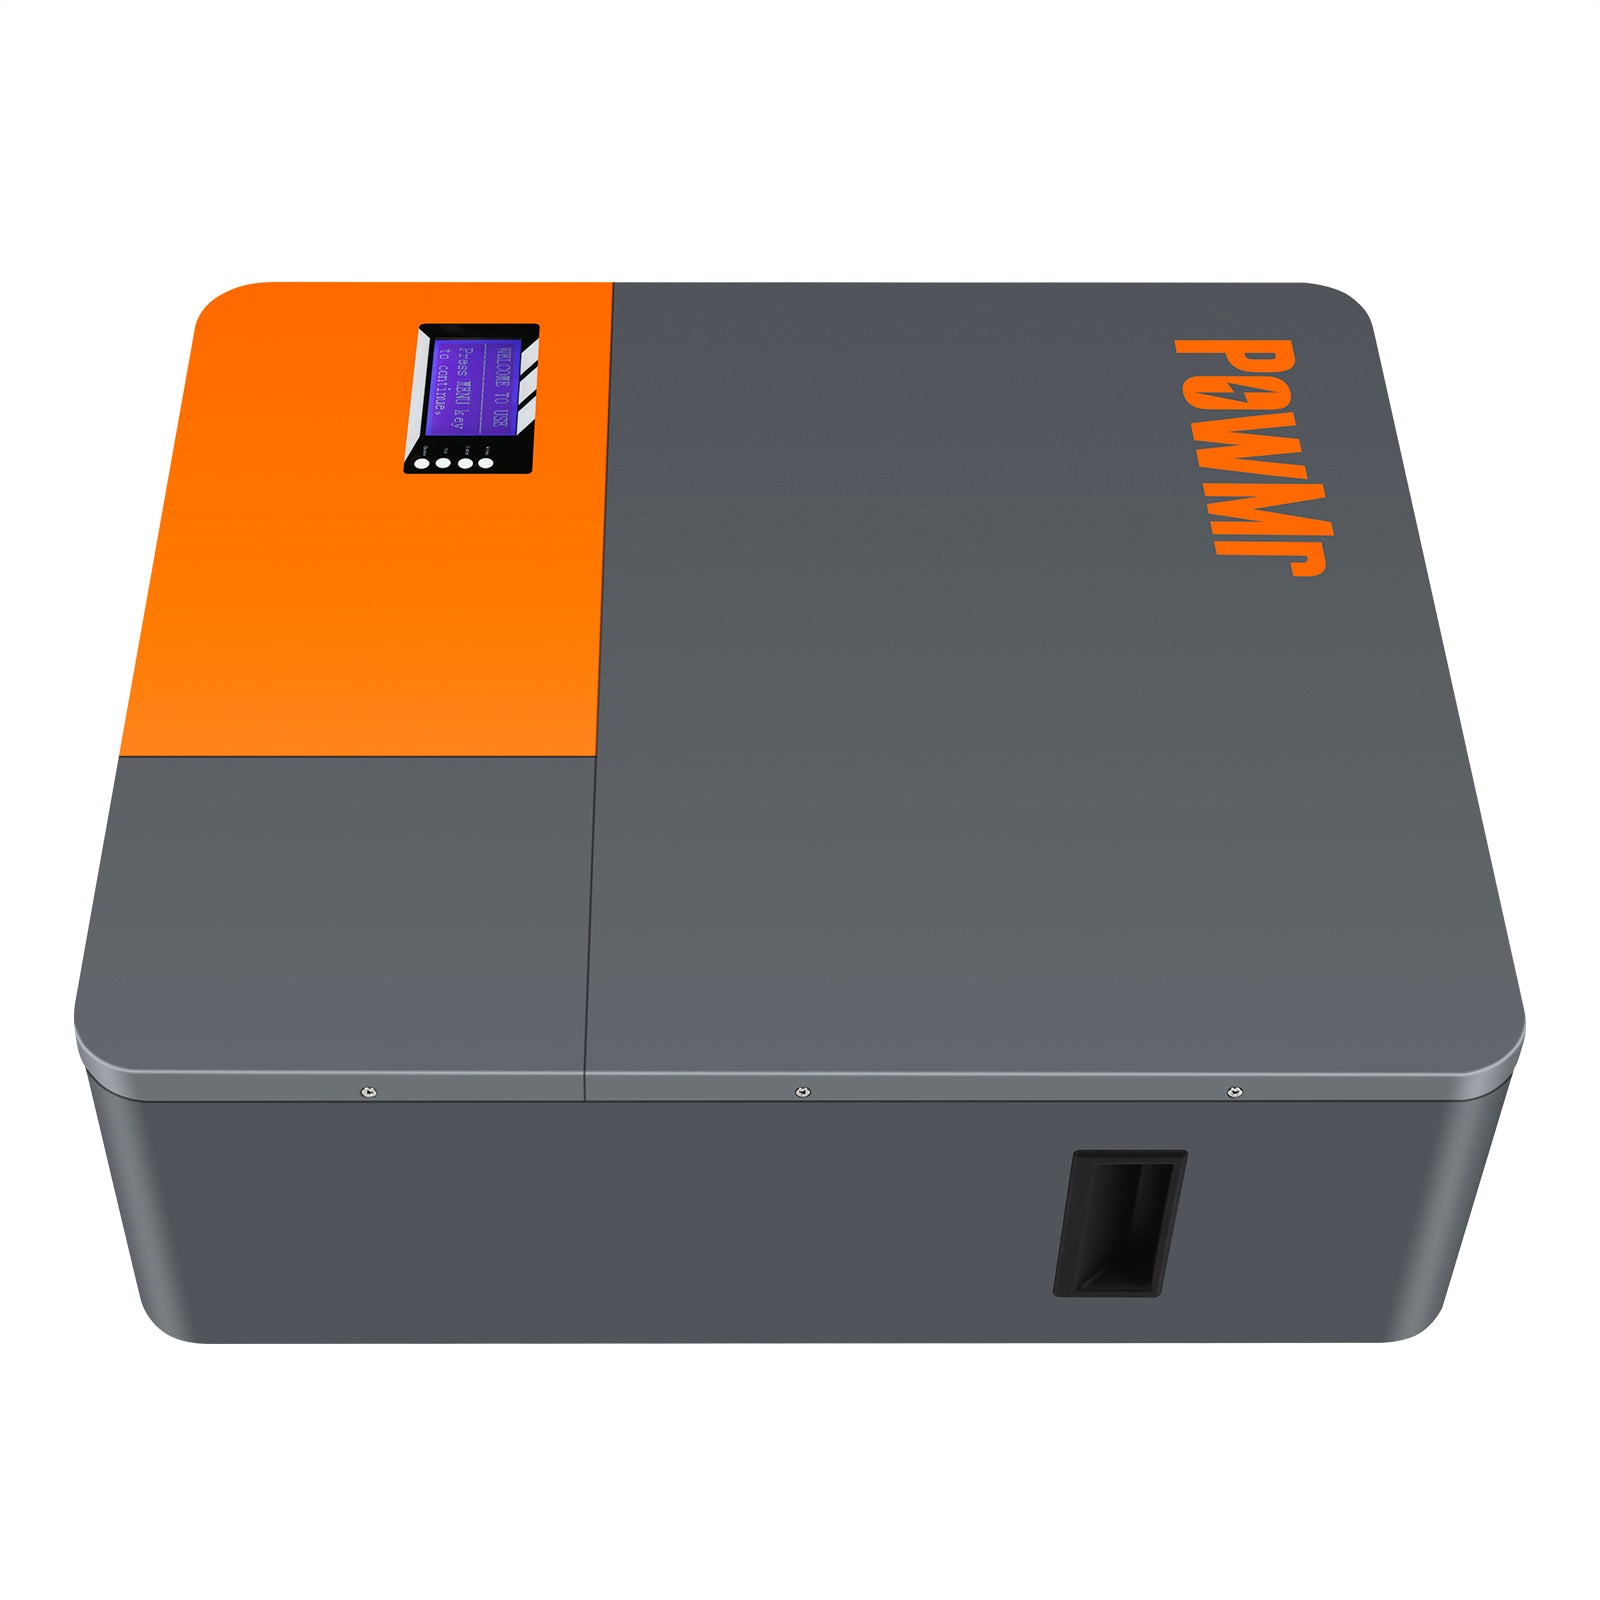 Powerwall 100AH 48V Lithium Battery – PowMr